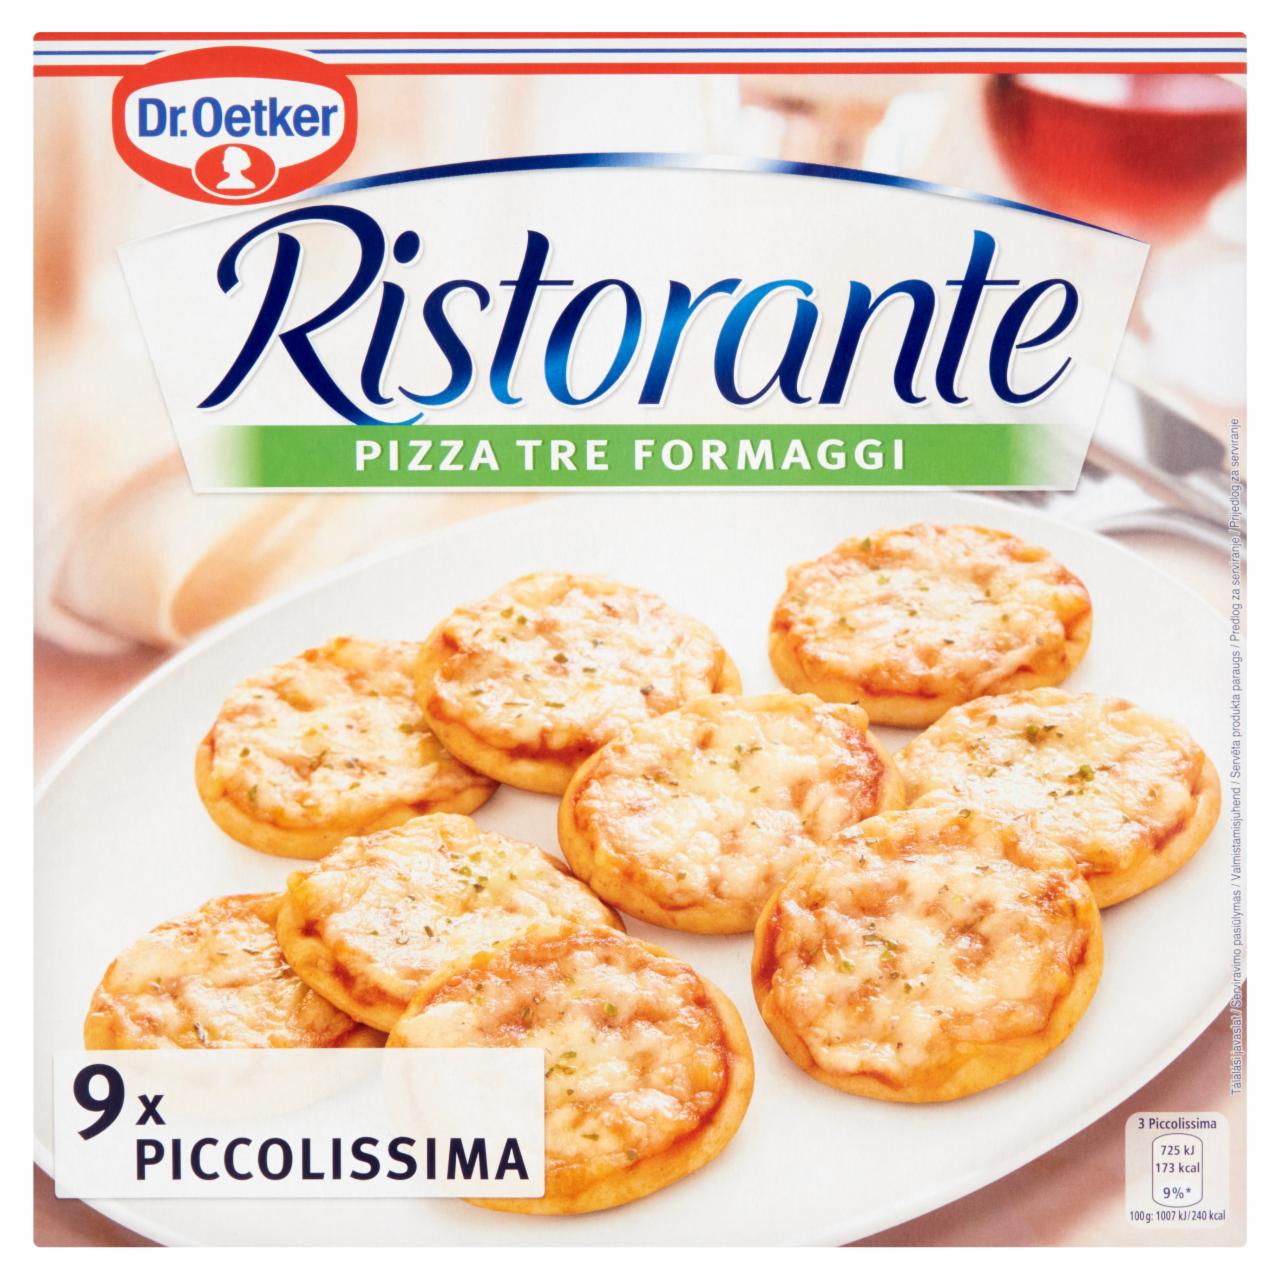 Képek - Dr. Oetker Ristorante Pizza Tre Formaggi gyorsfagyasztott mini pizza 216 g